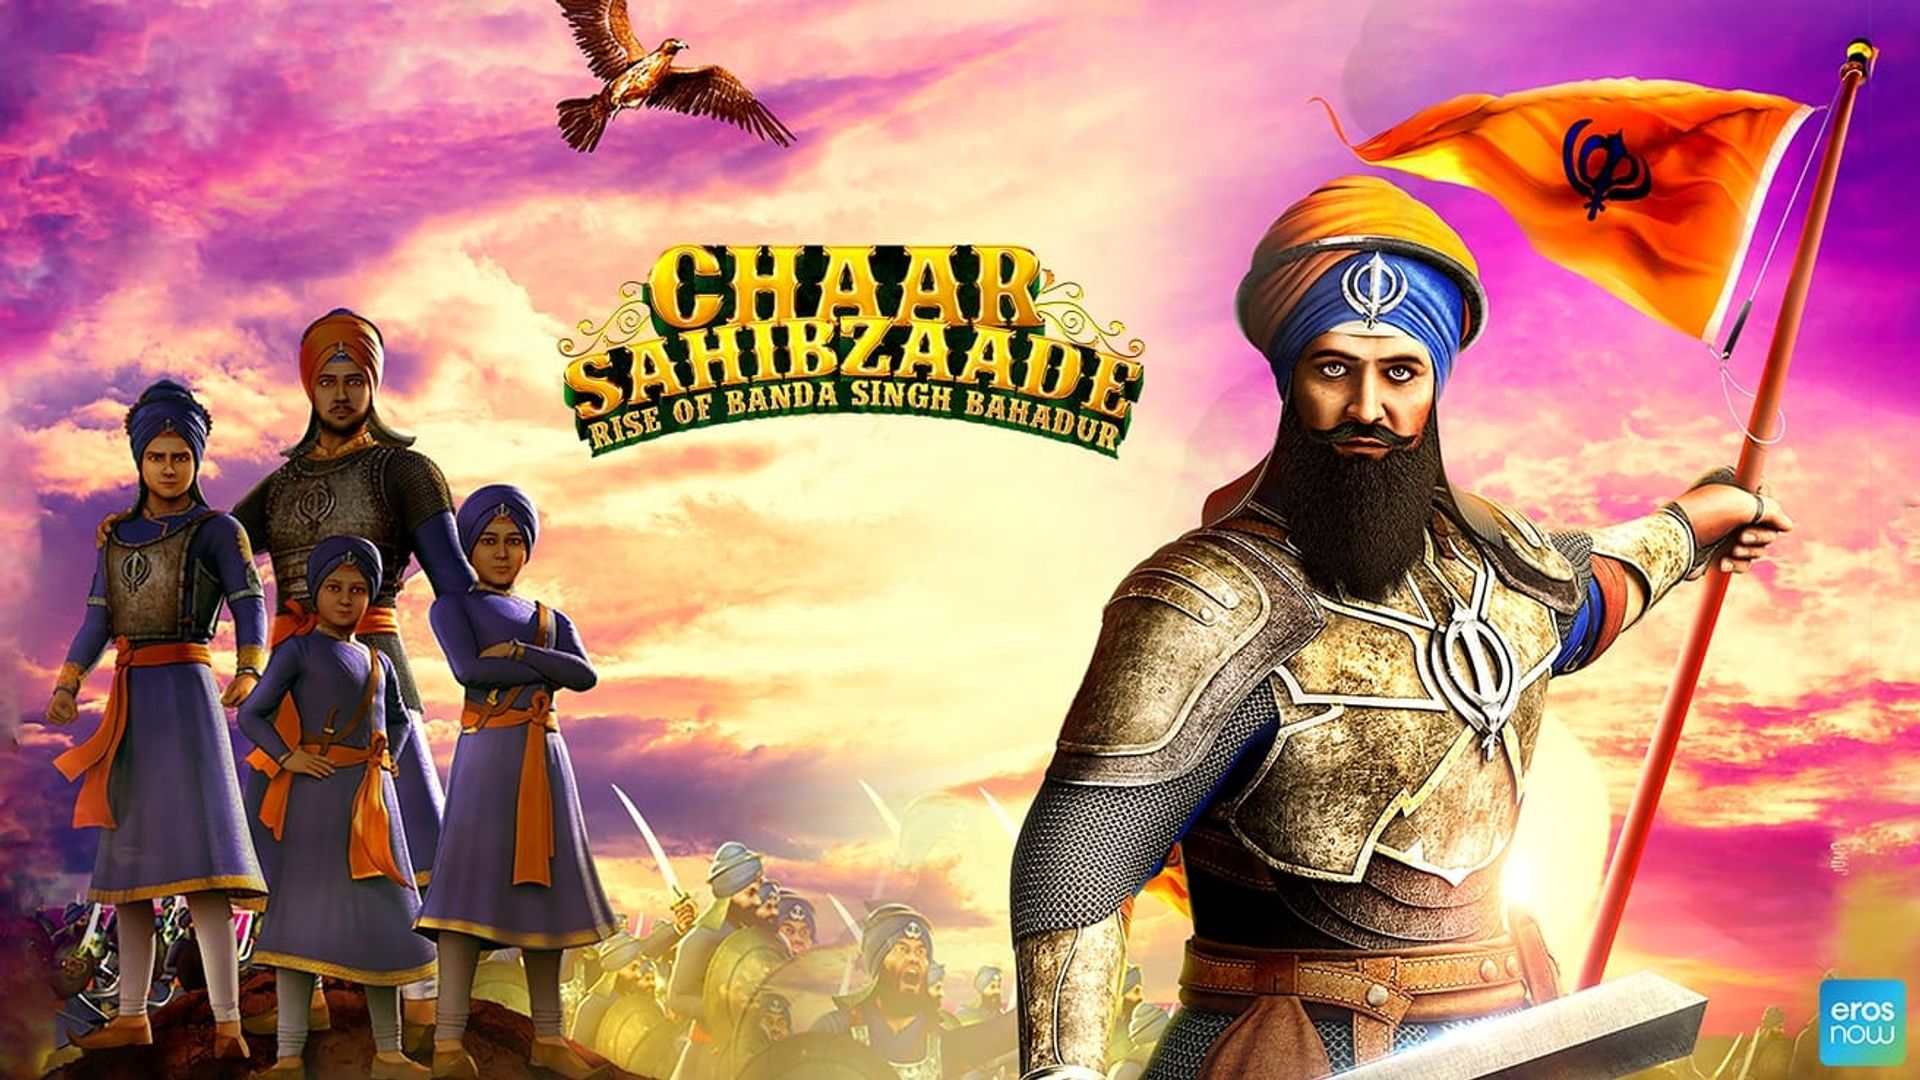 Chaar Sahibzaade 2: Rise of Banda Singh Bahadur background